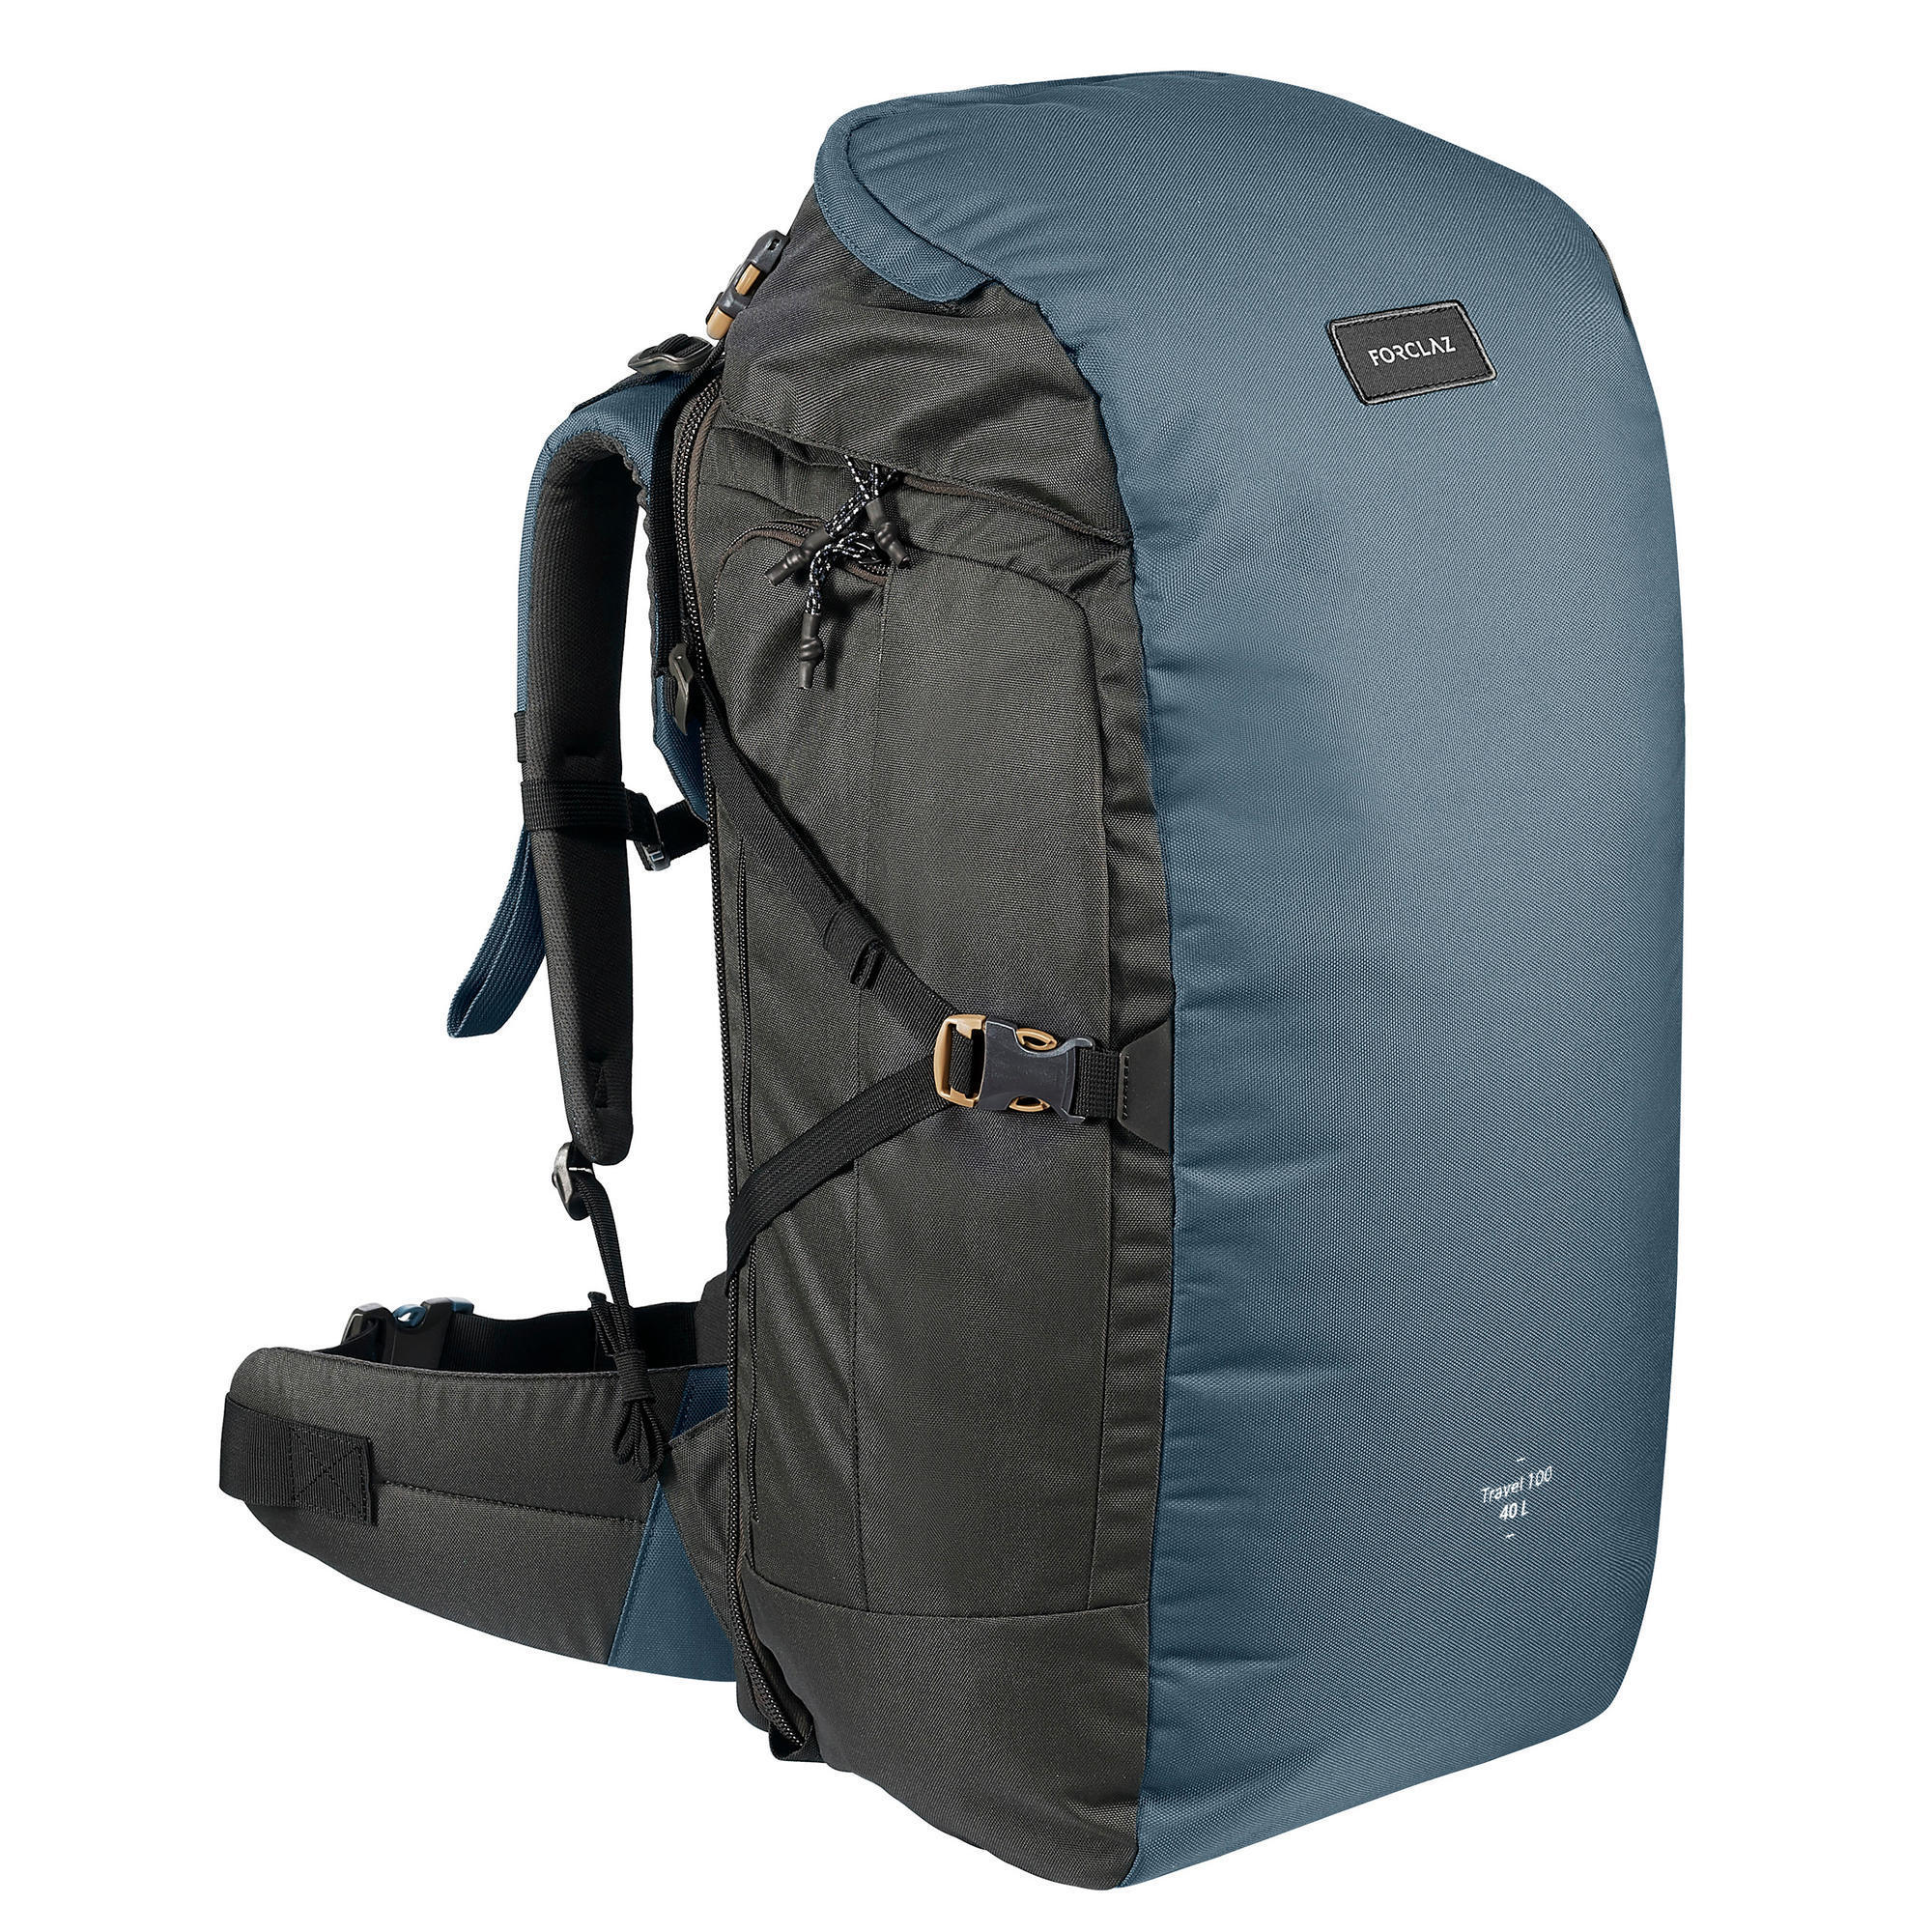 40 litre travel backpack